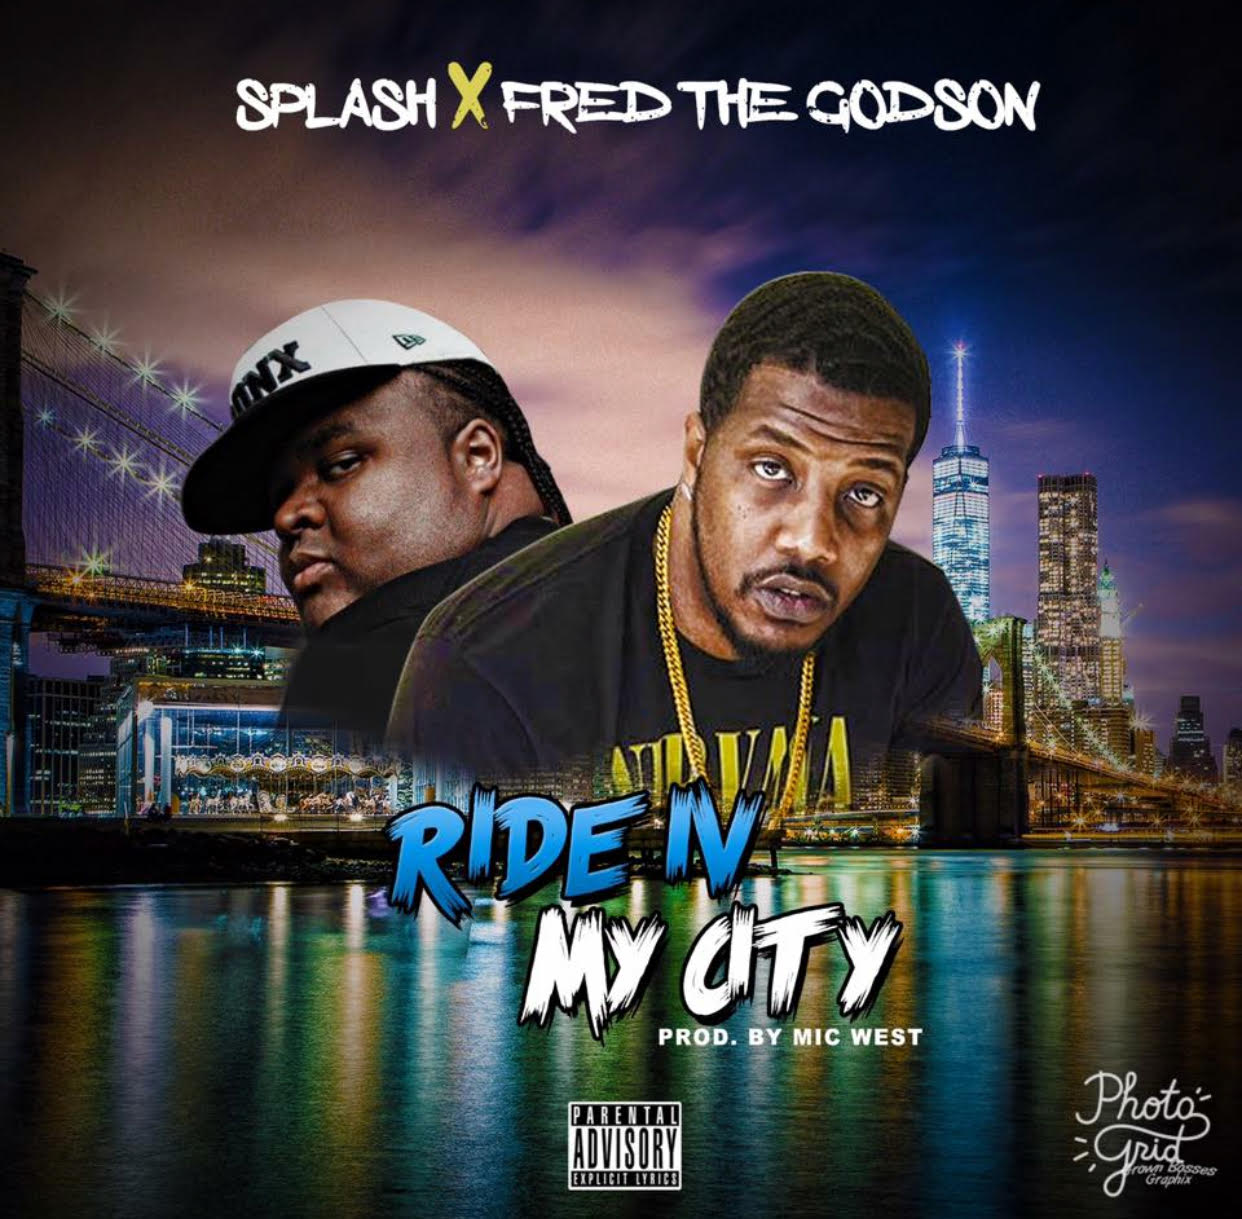 Music: Splash Feat Fred The Godson “Ride IV My City”